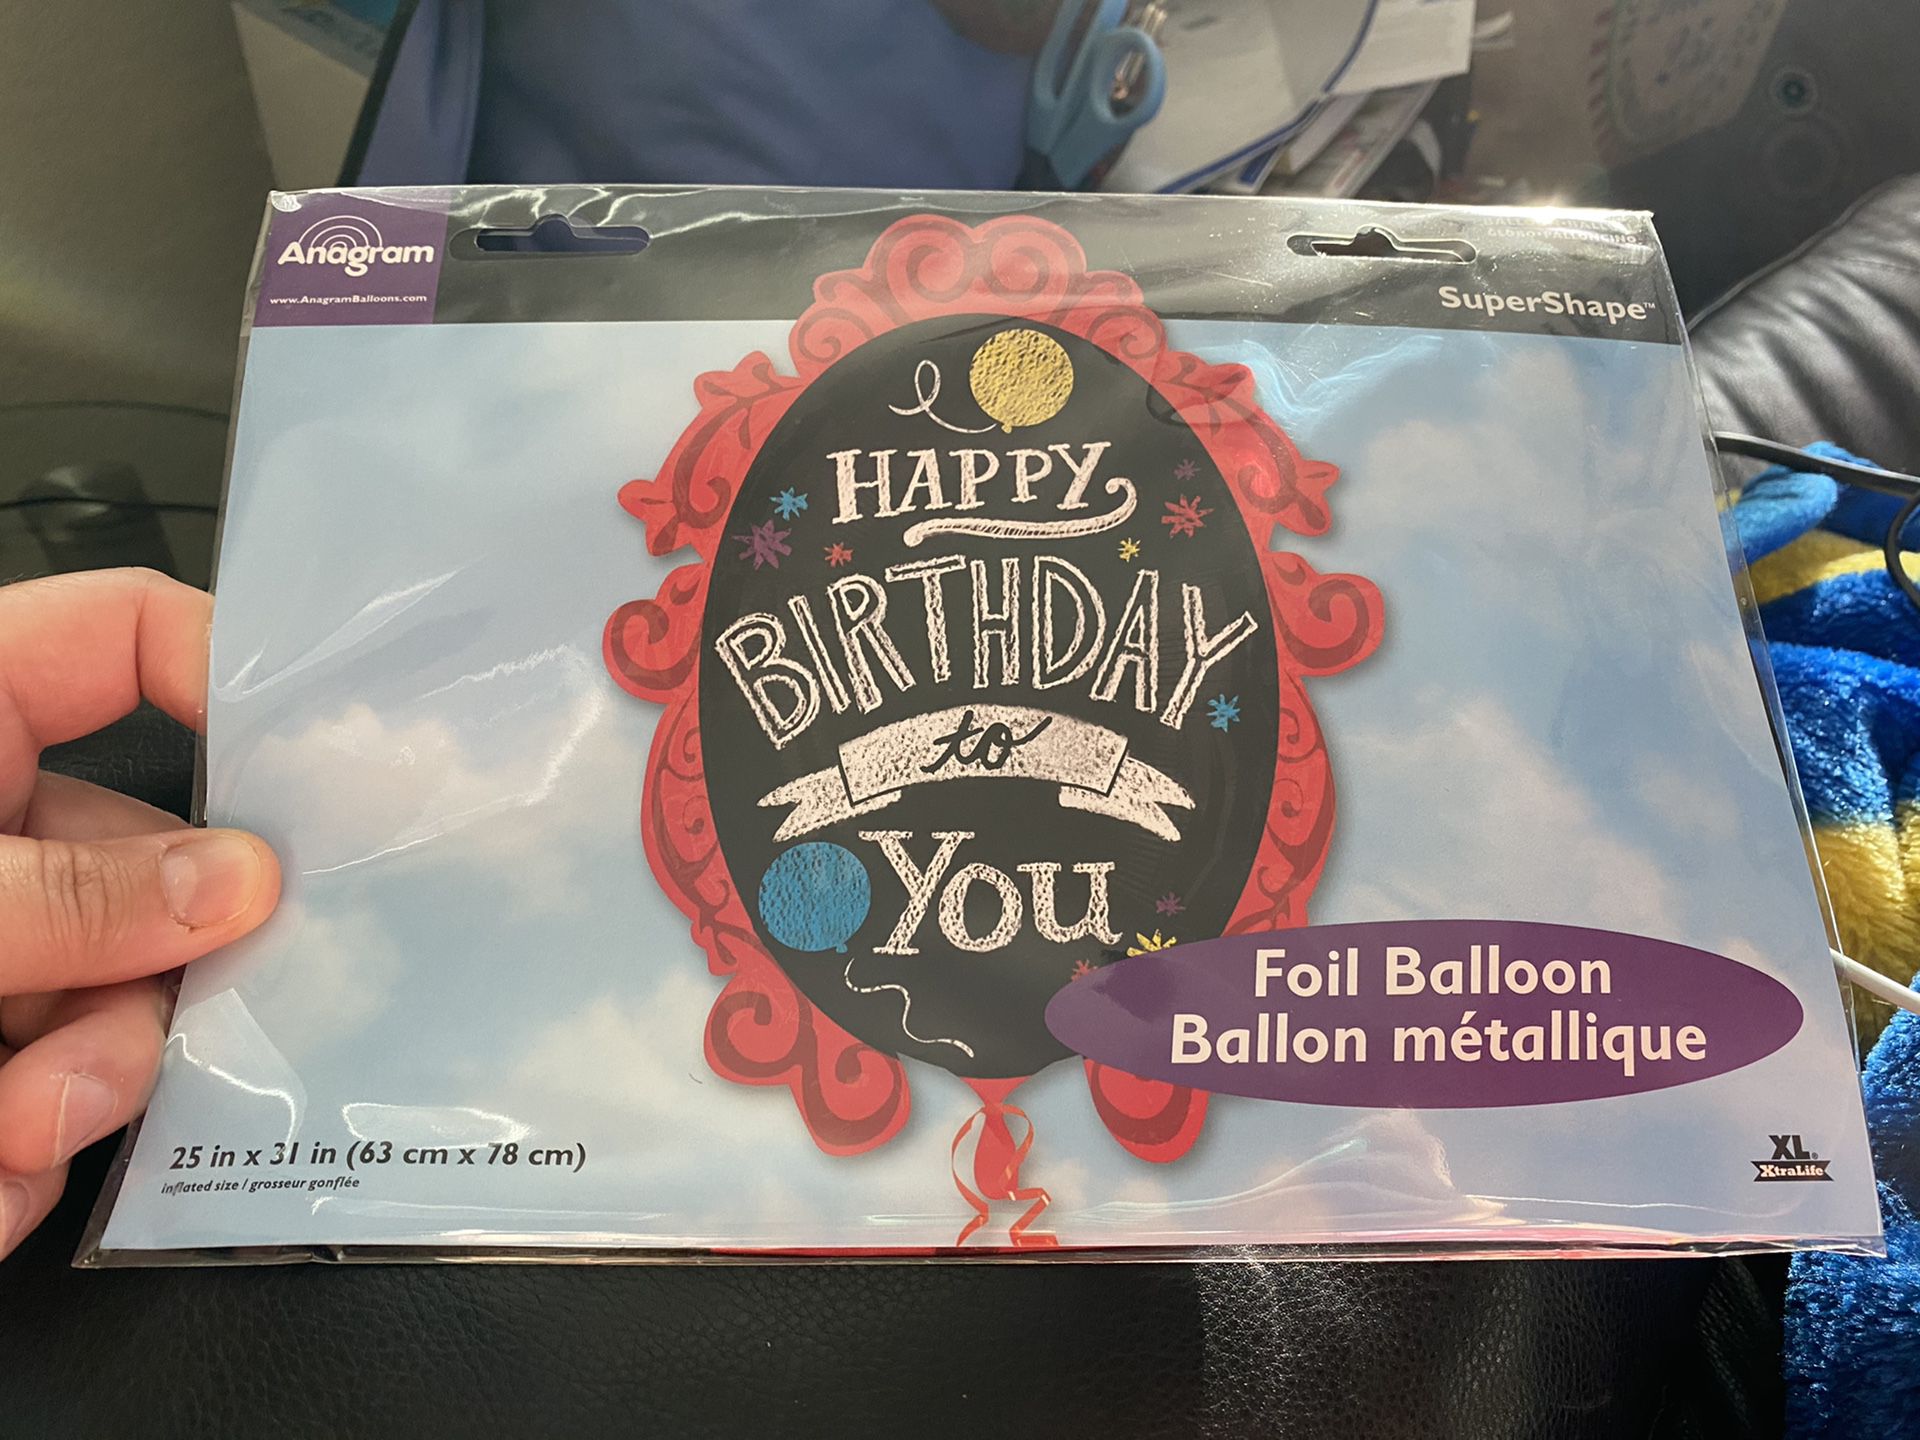 New Jumbo Happy Birthday To You Foil Balloon!